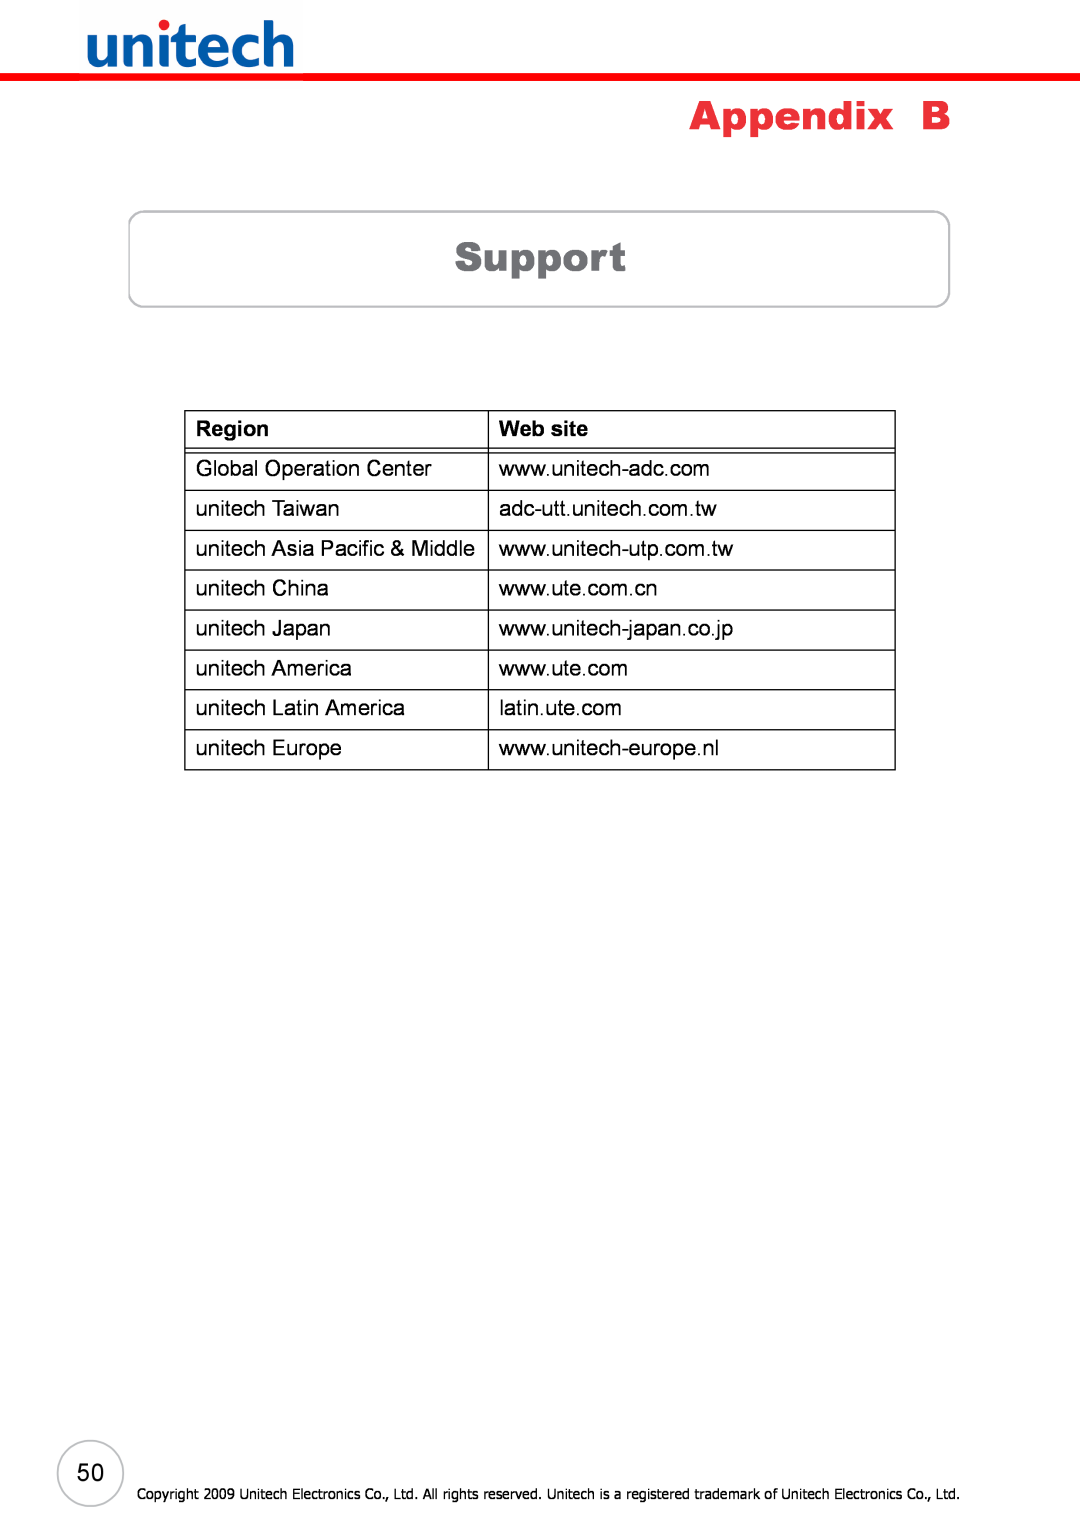 Unitech RS700 user manual Appendix B, Support, Region, Web site 